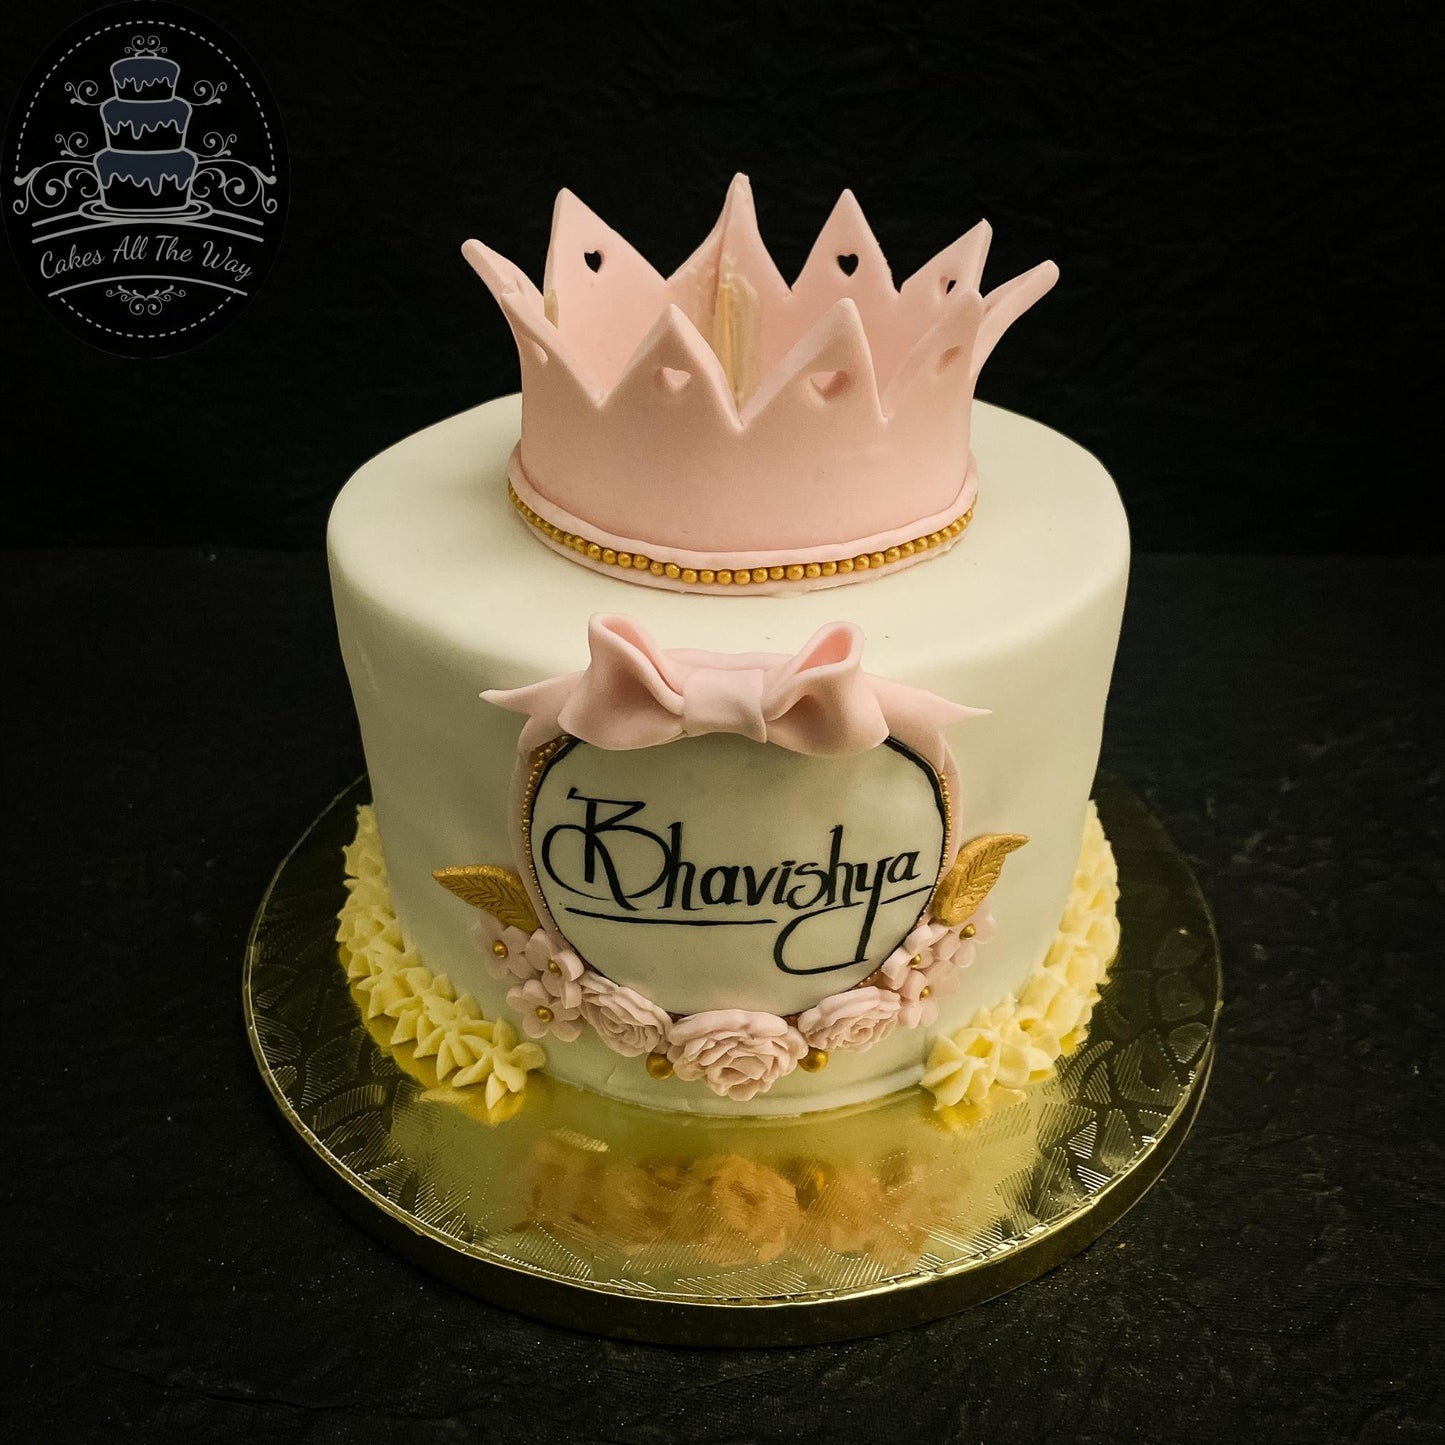 Princess Crown Theme Cake